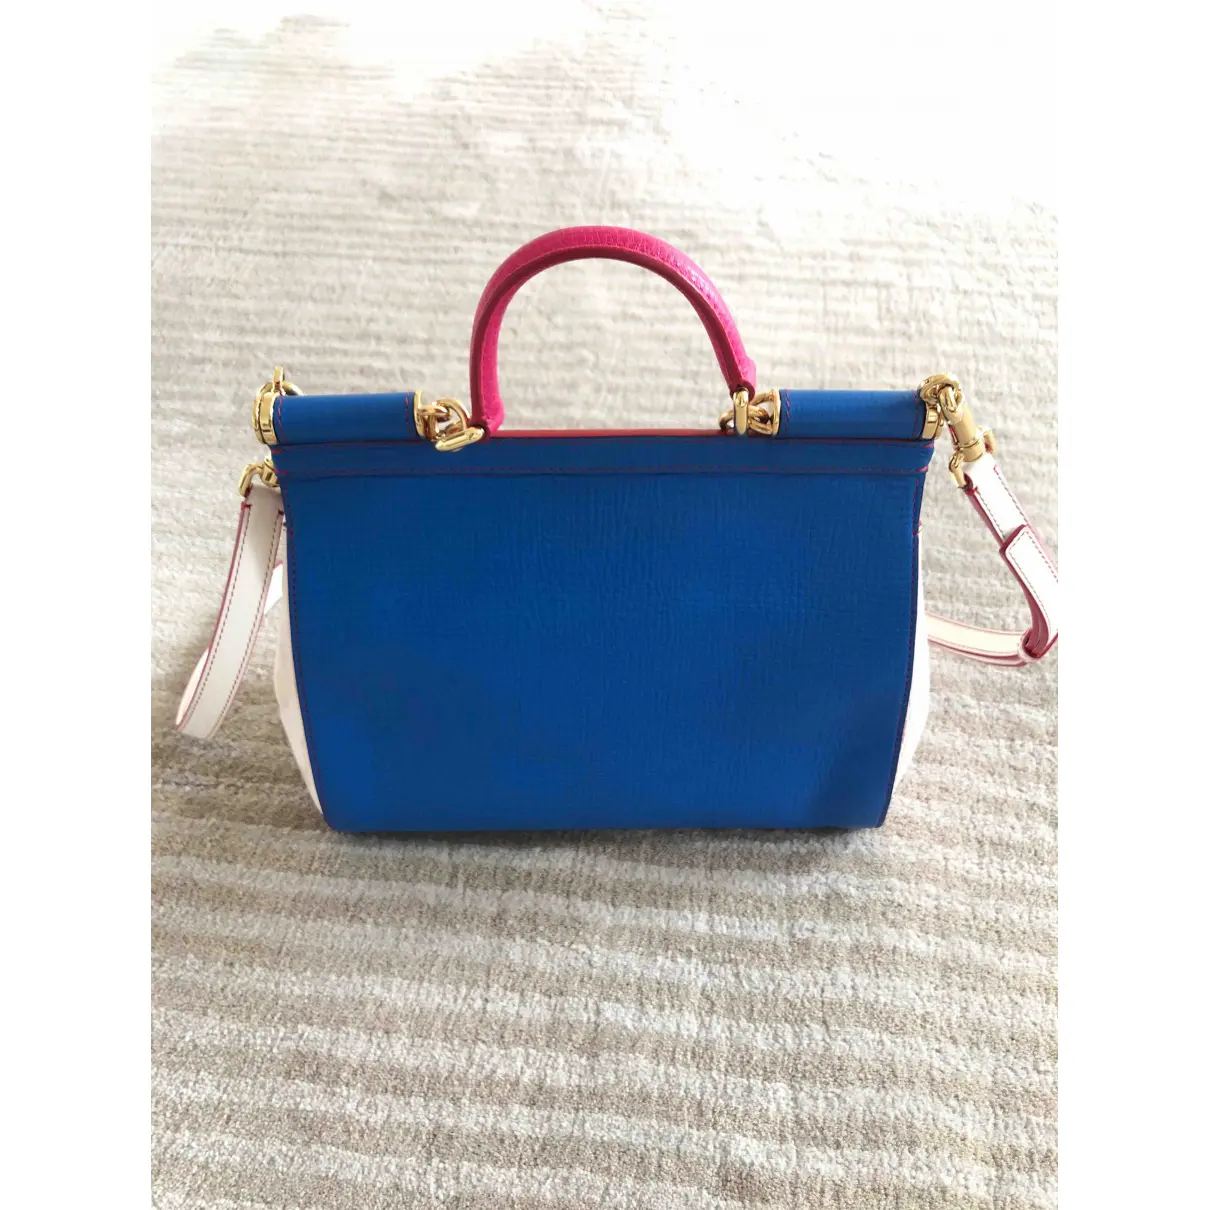 Buy Dolce & Gabbana Sicily leather satchel online